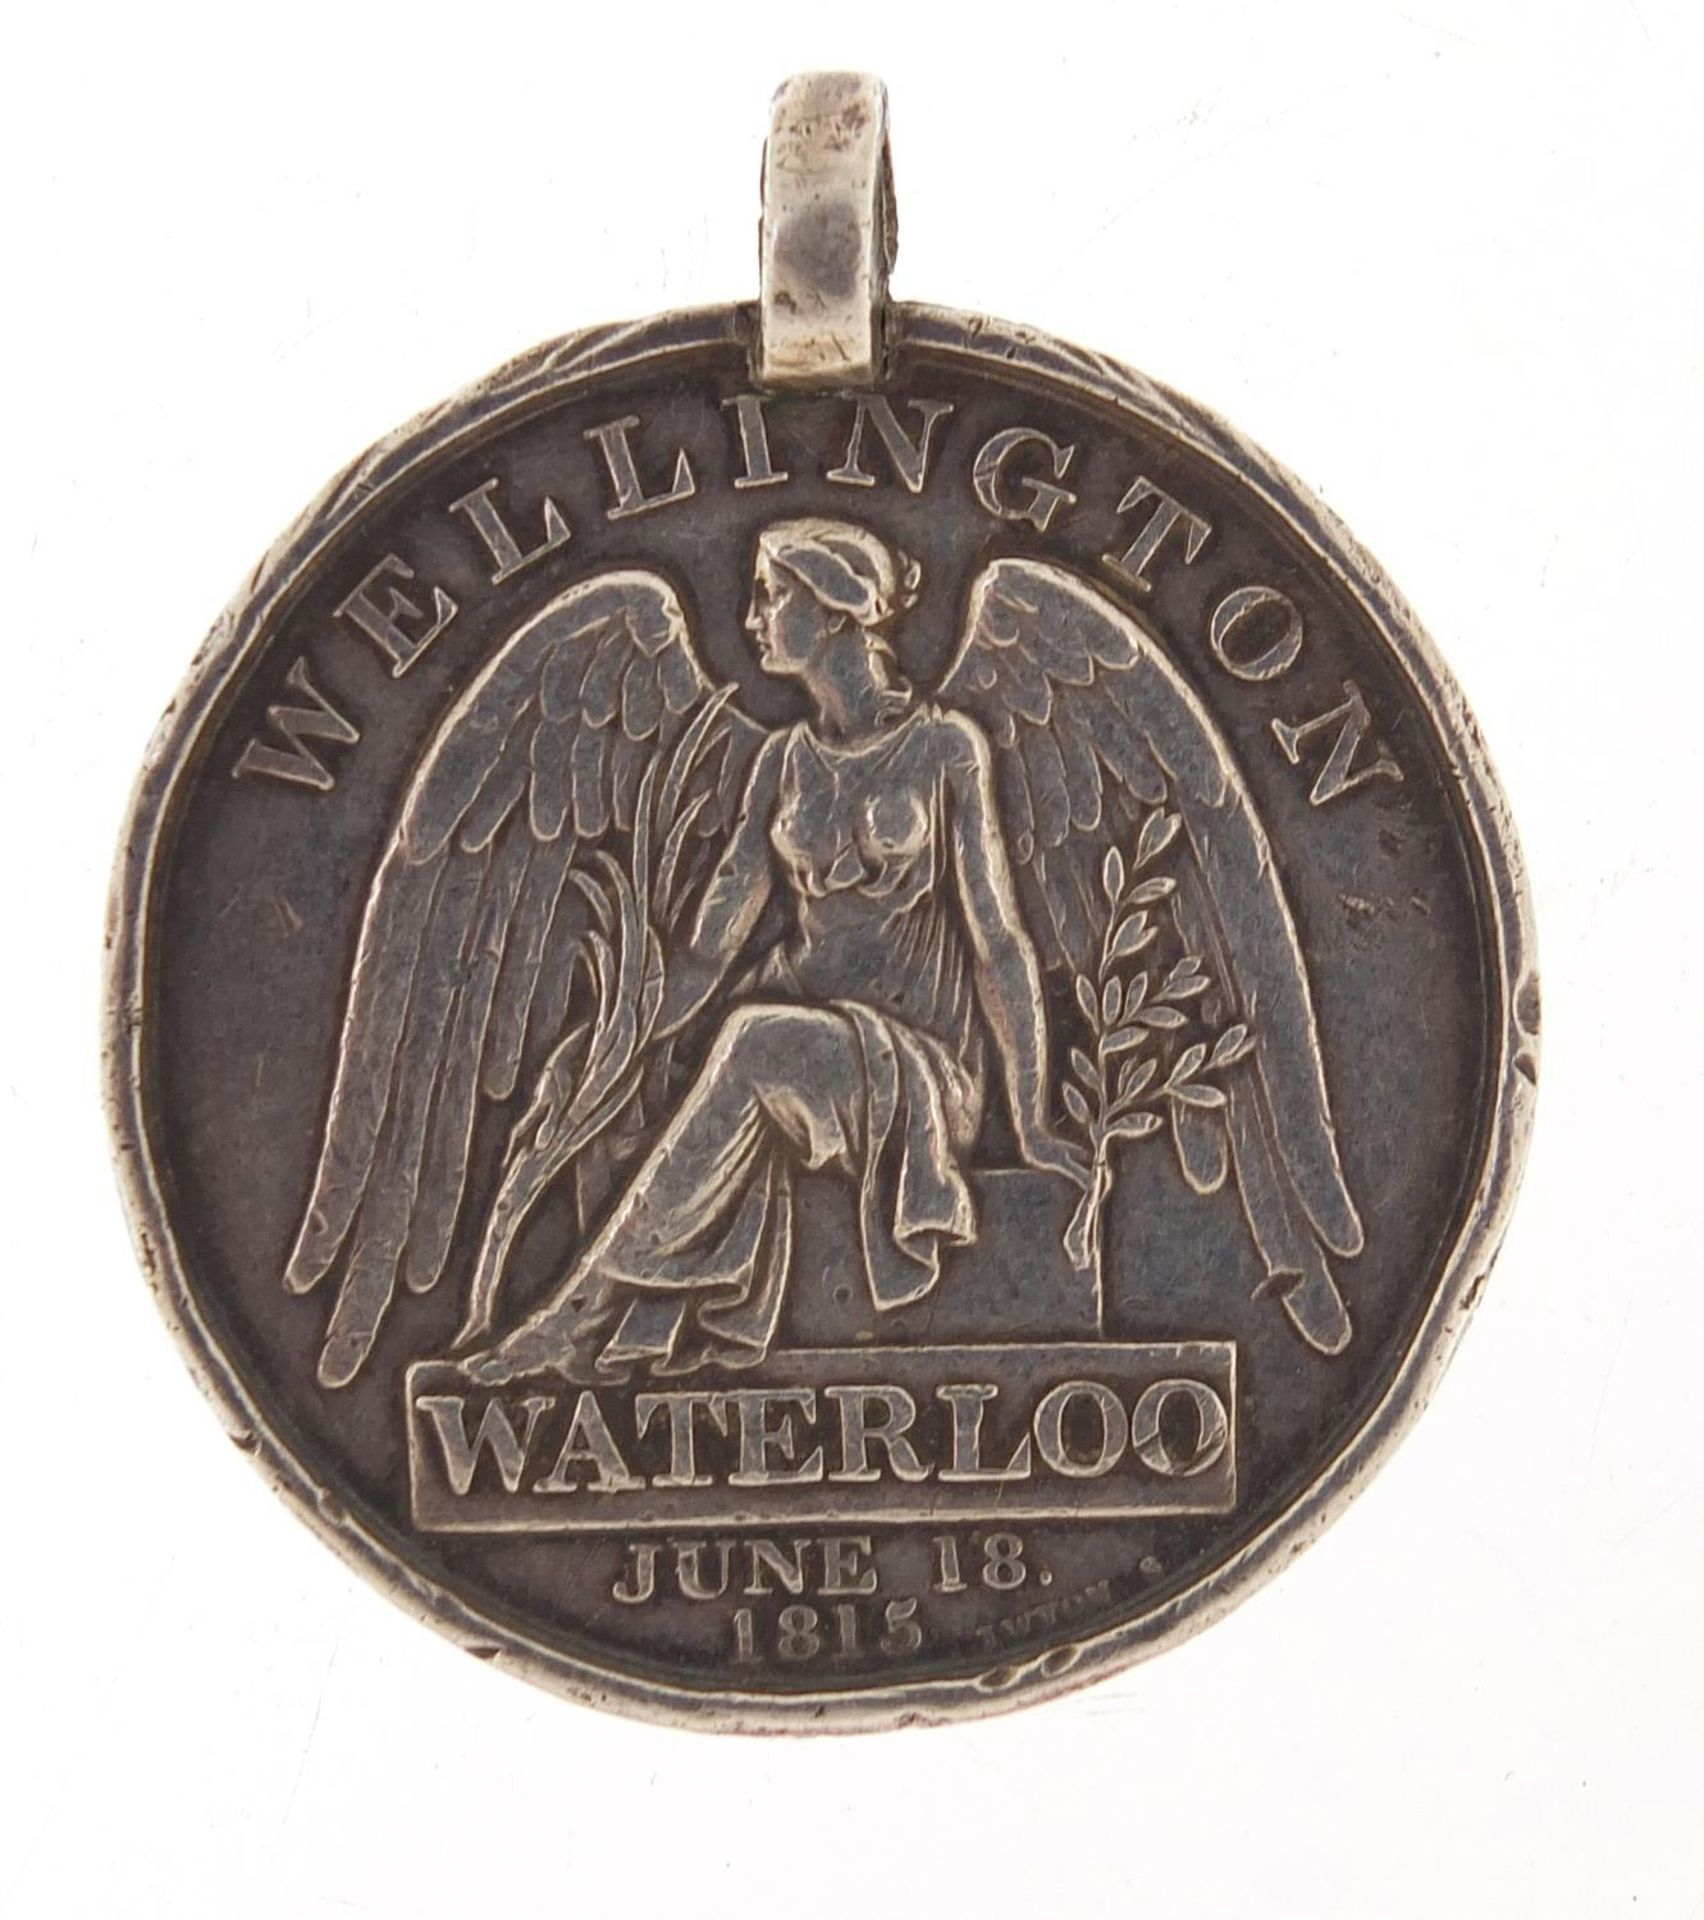 Georgian British military Waterloo medal awarded to EDWARD PRINCE 3RD BATT GRENAD GUARDS - Image 5 of 5